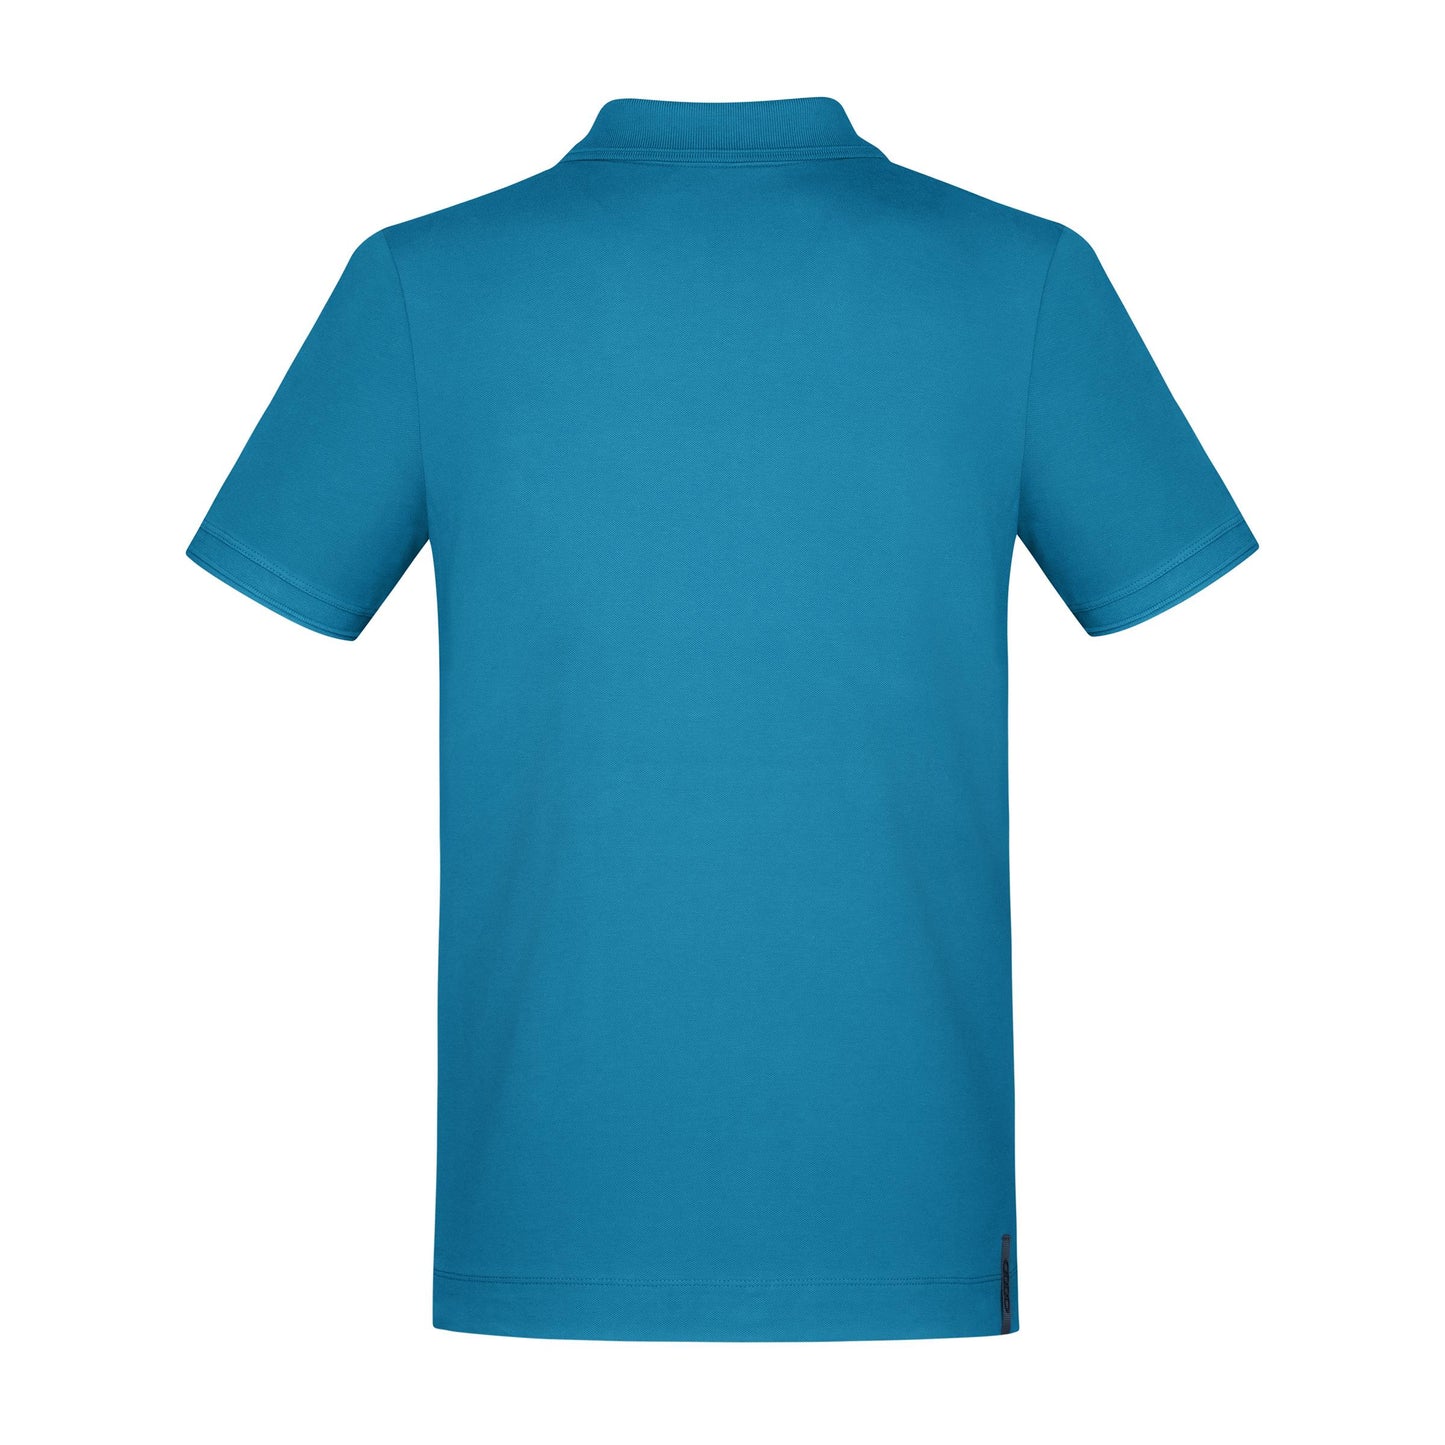 Audi polo shirt, men's turquoise